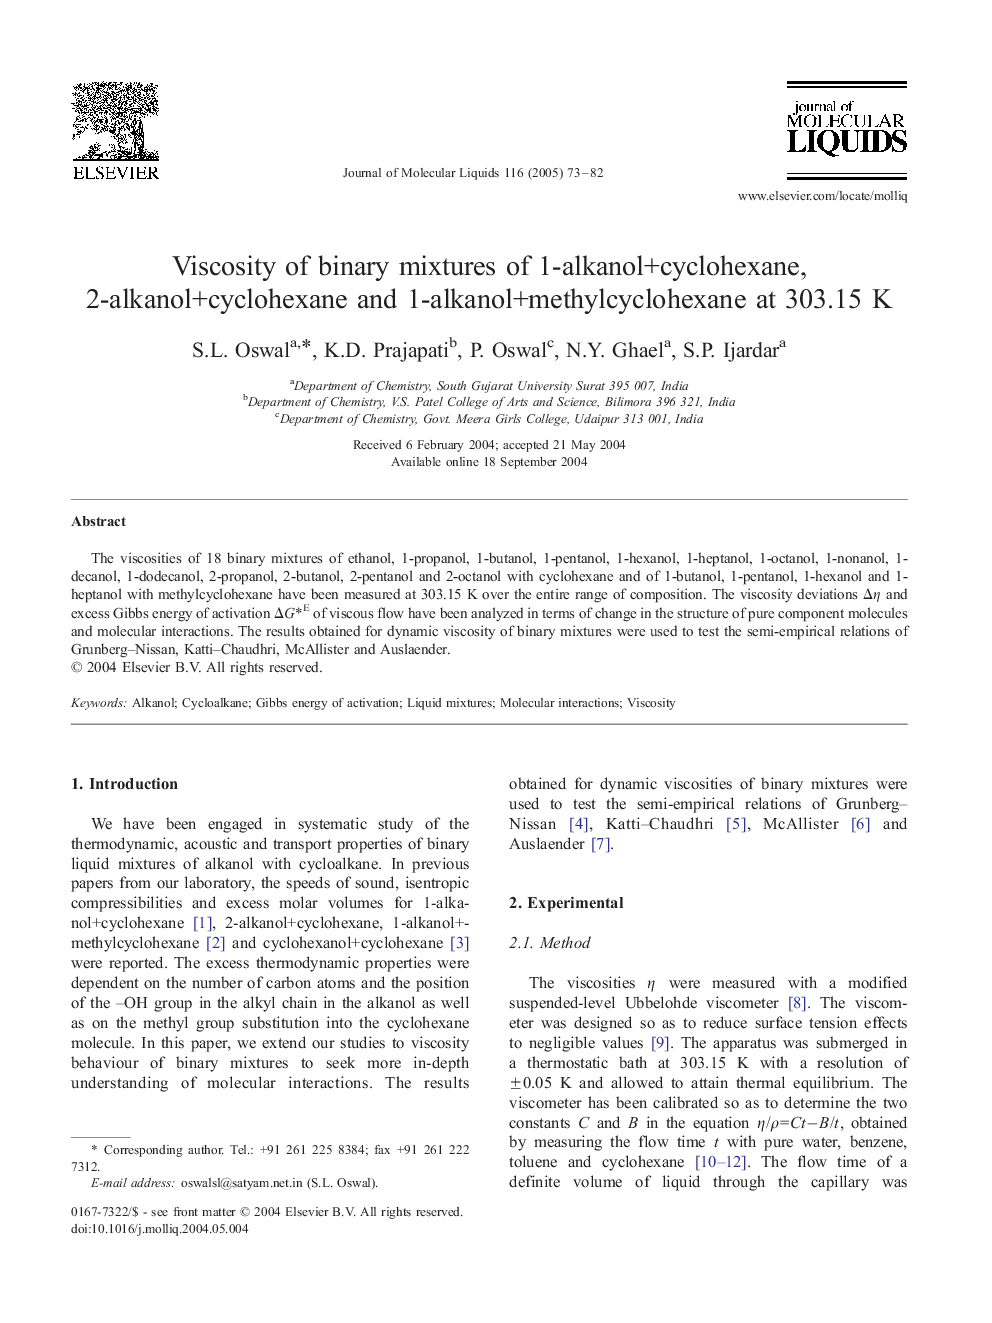 Viscosity of binary mixtures of 1-alkanol+cyclohexane, 2-alkanol+cyclohexane and 1-alkanol+methylcyclohexane at 303.15 K